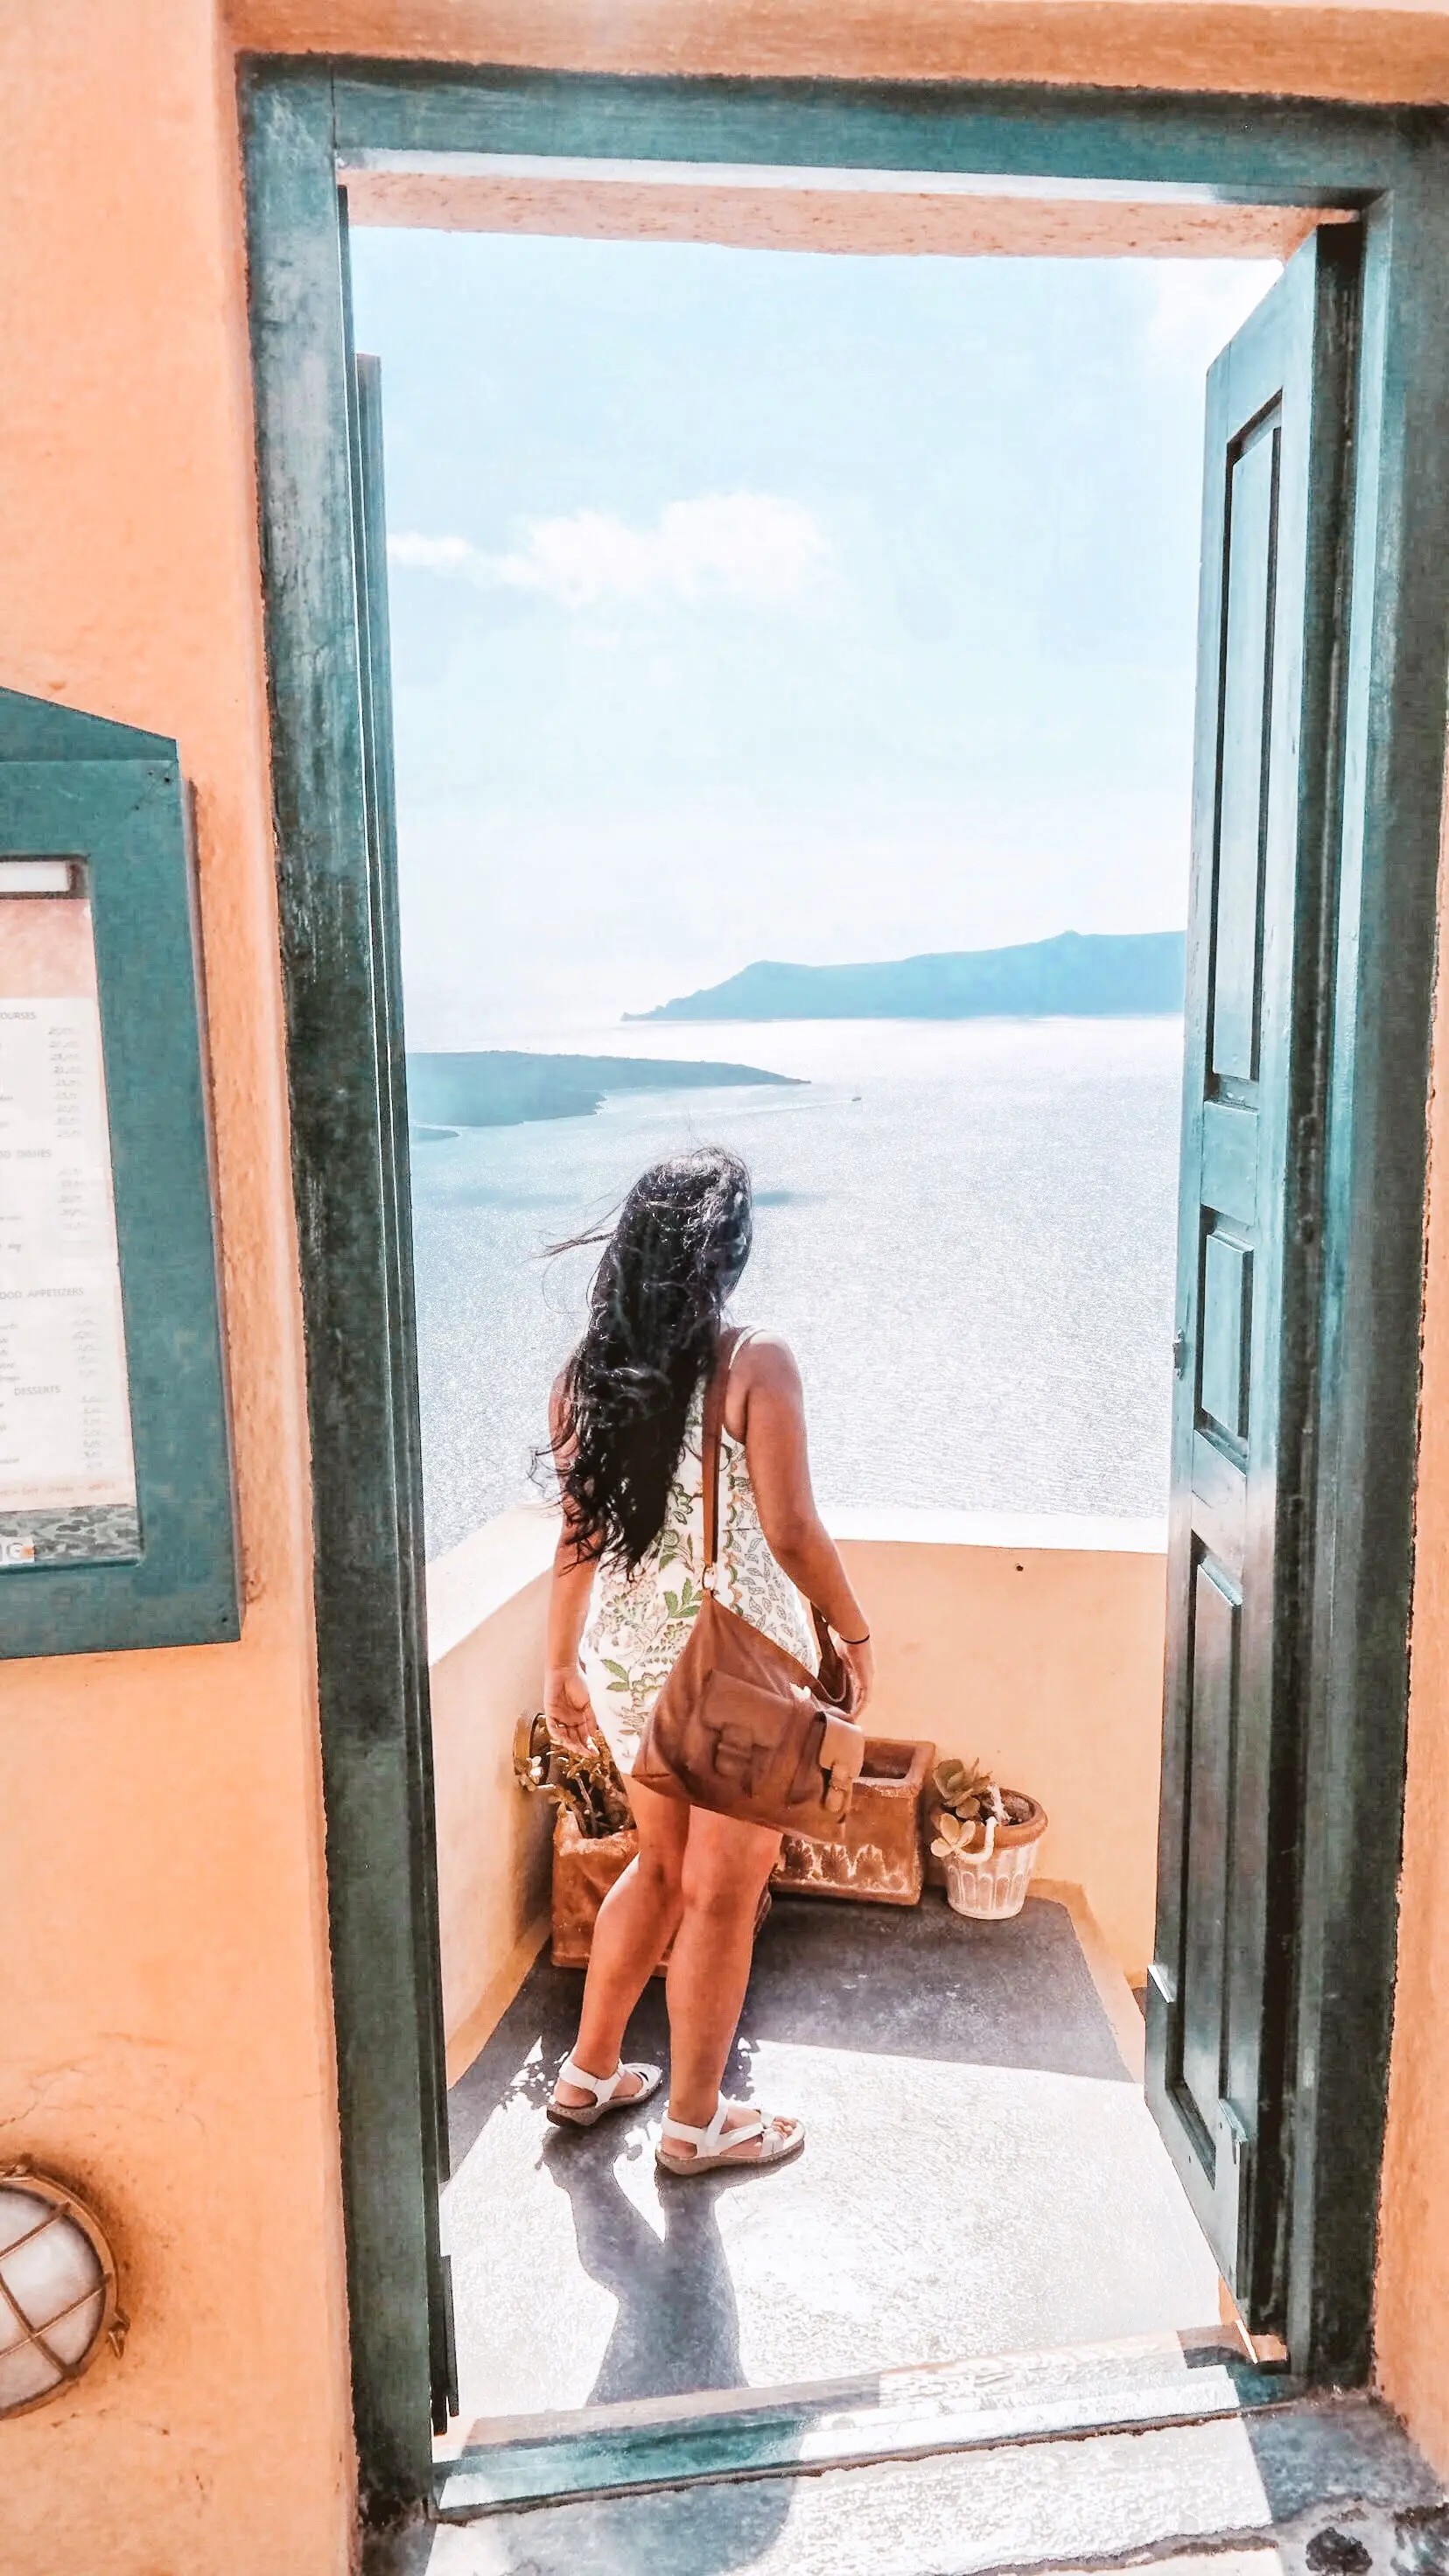 Paris Chic Style Santorini Greece Fira Oia Fashion Travel Blog Lifestyle Fun Things To Do At Home When Bored Lockdown Coronavirus